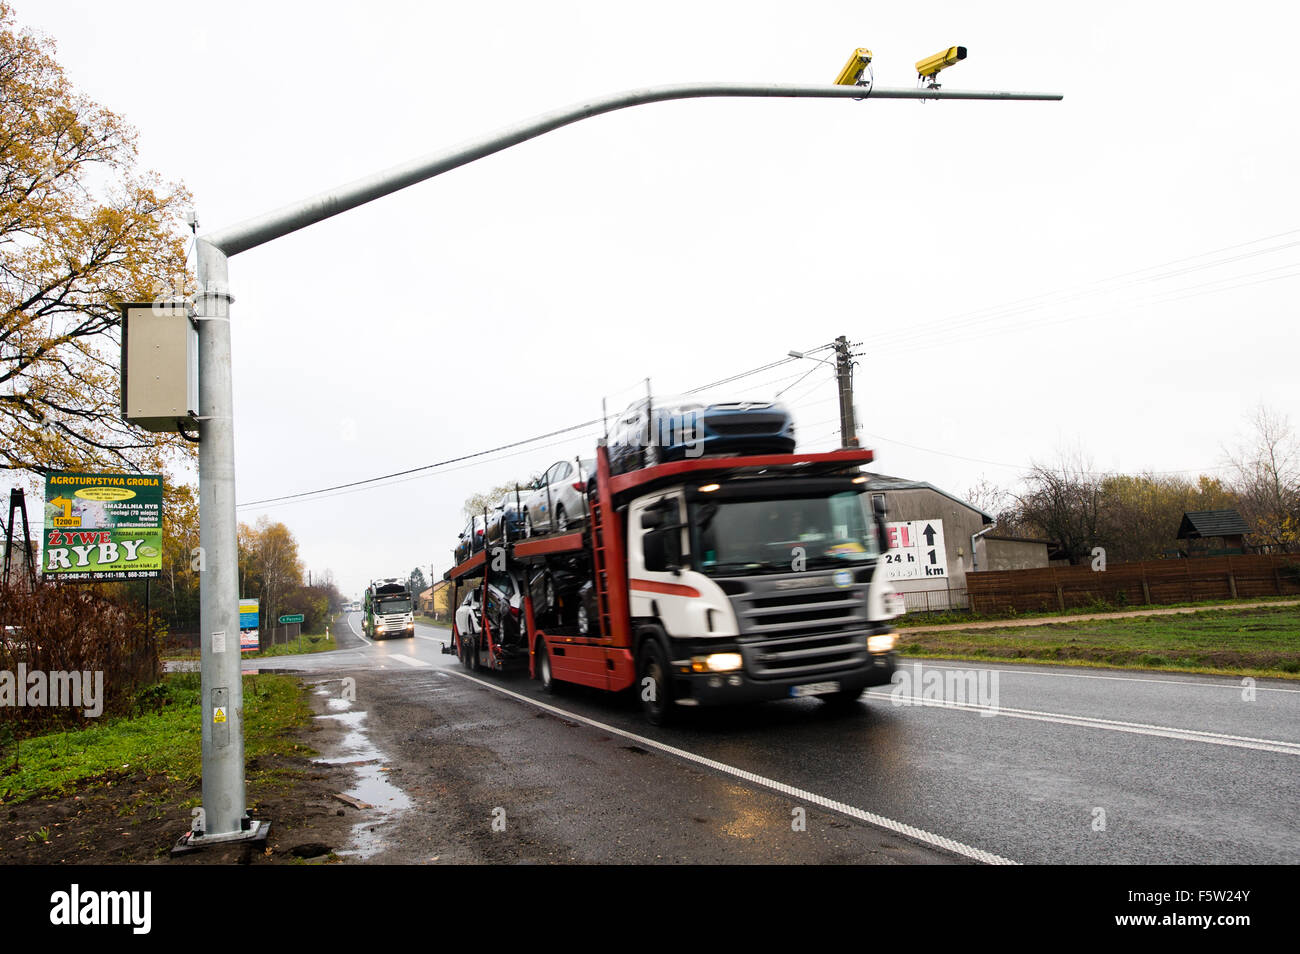 Kluki, Poland. 9th November 2015. Average speed cameras mounted on national road in Kluki, Poland. Credit:  Marcin Rozpedowski/Alamy Live News Stock Photo